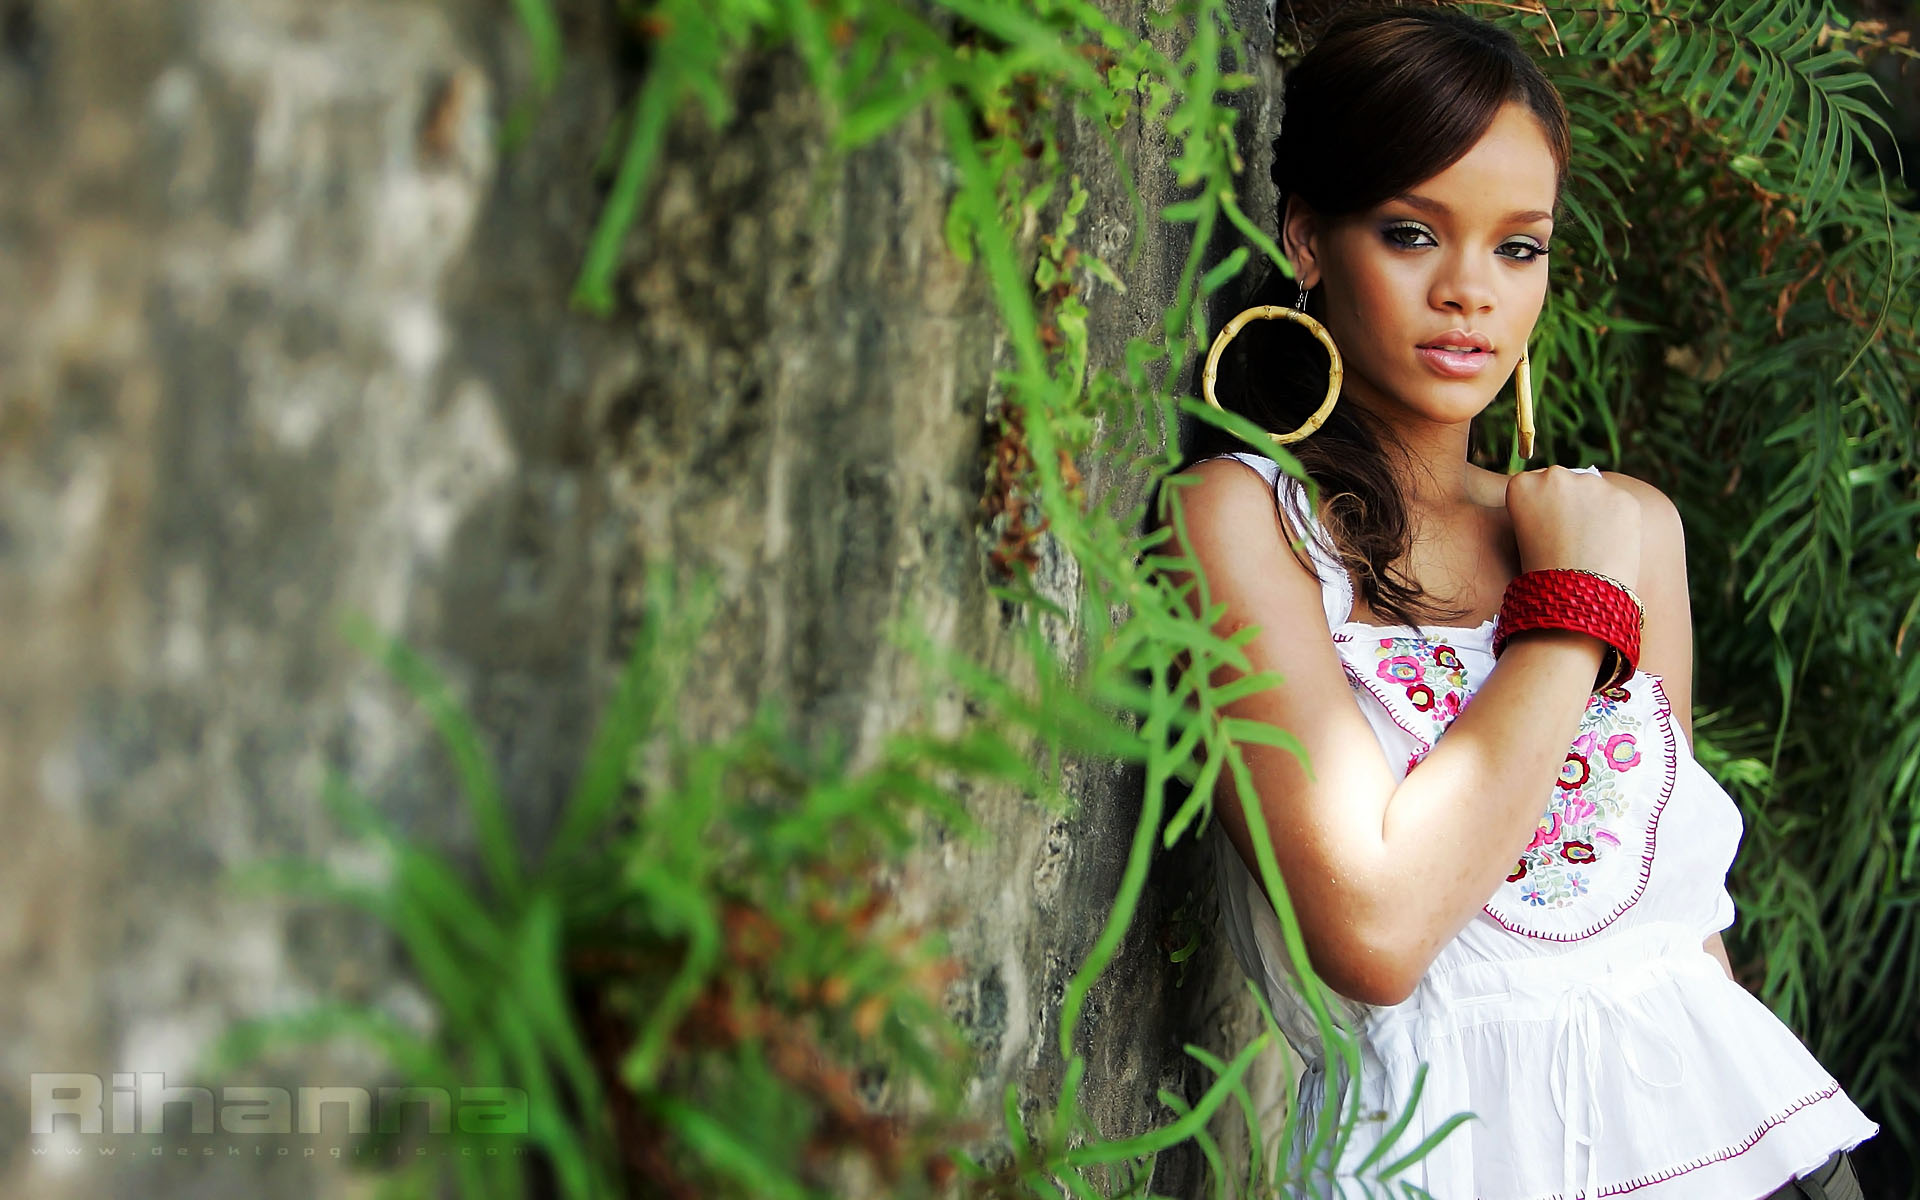 Rihanna Wallpaper Full HD Pictures